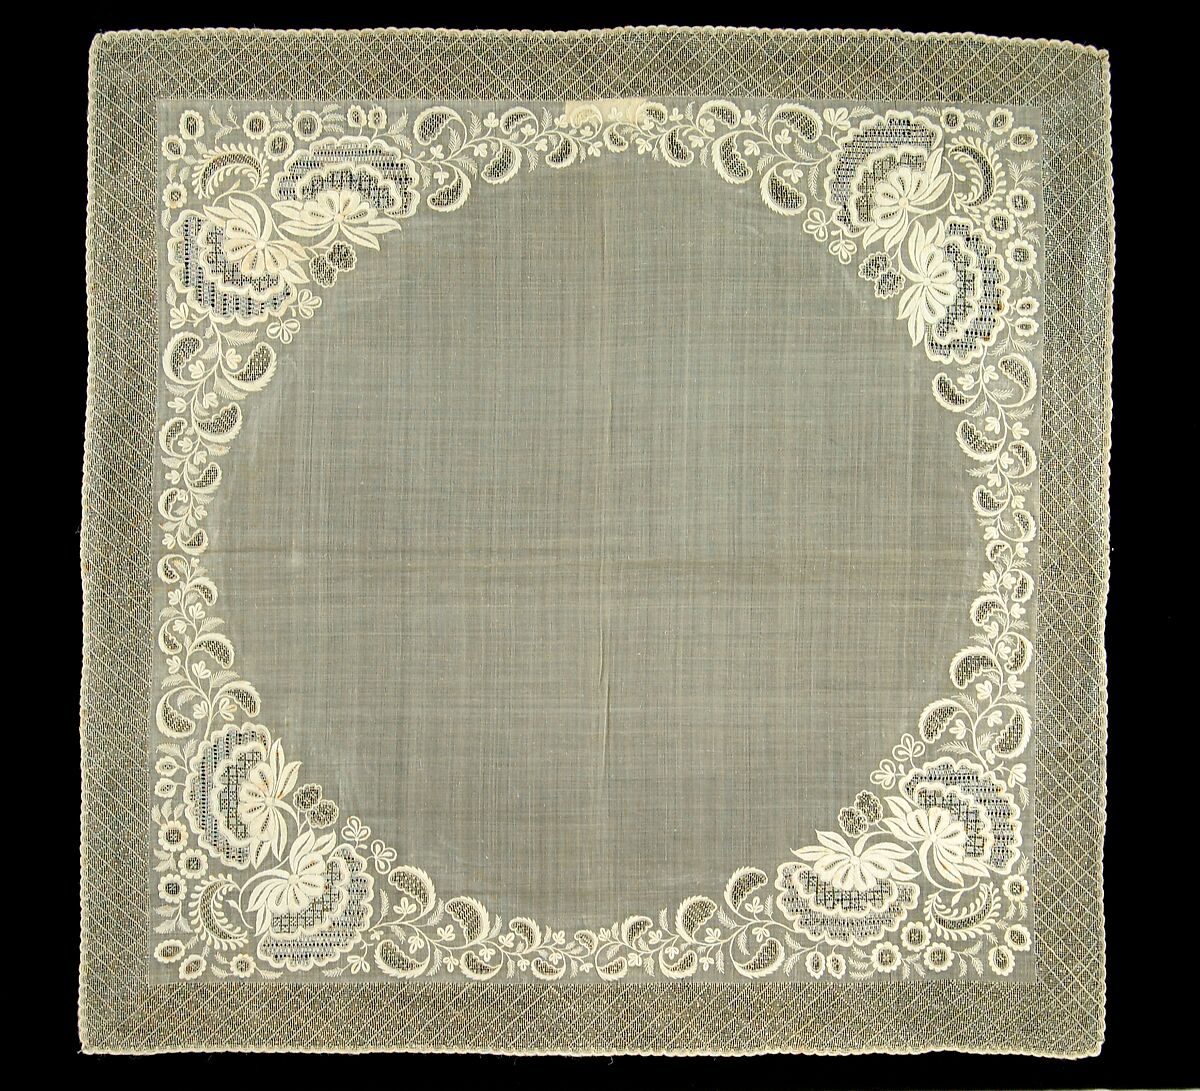 Handkerchief, Vegetable fiber, probably Philippine 